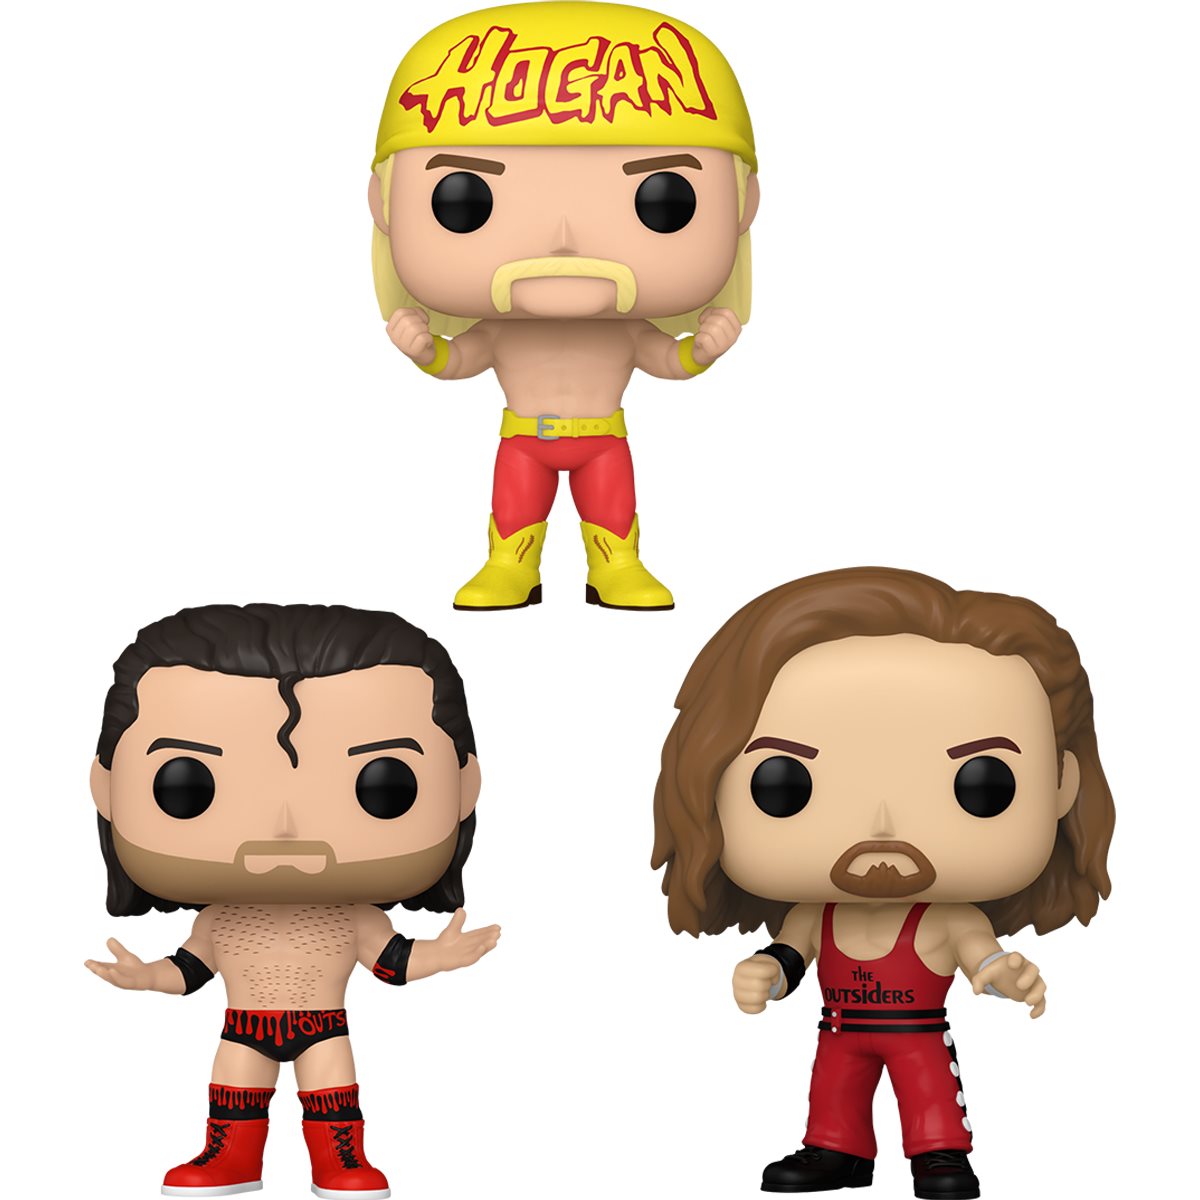 Funko Pop WWE: Hogan y The Outsiders 3 Pack